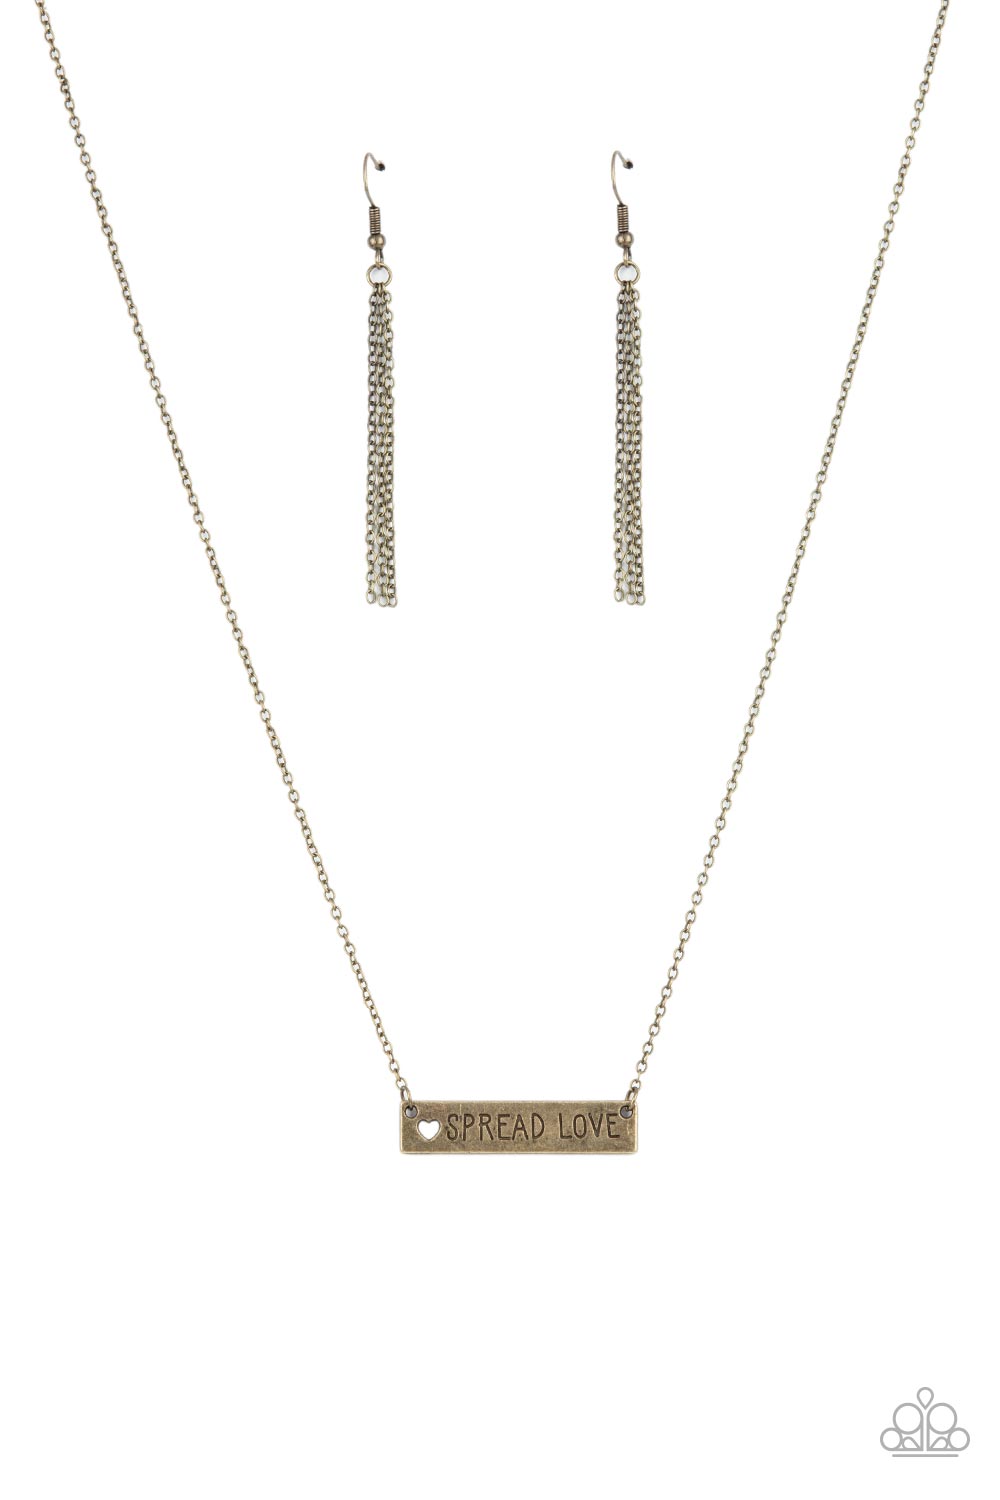 five-dollar-jewelry-spread-love-brass-necklace-paparazzi-accessories